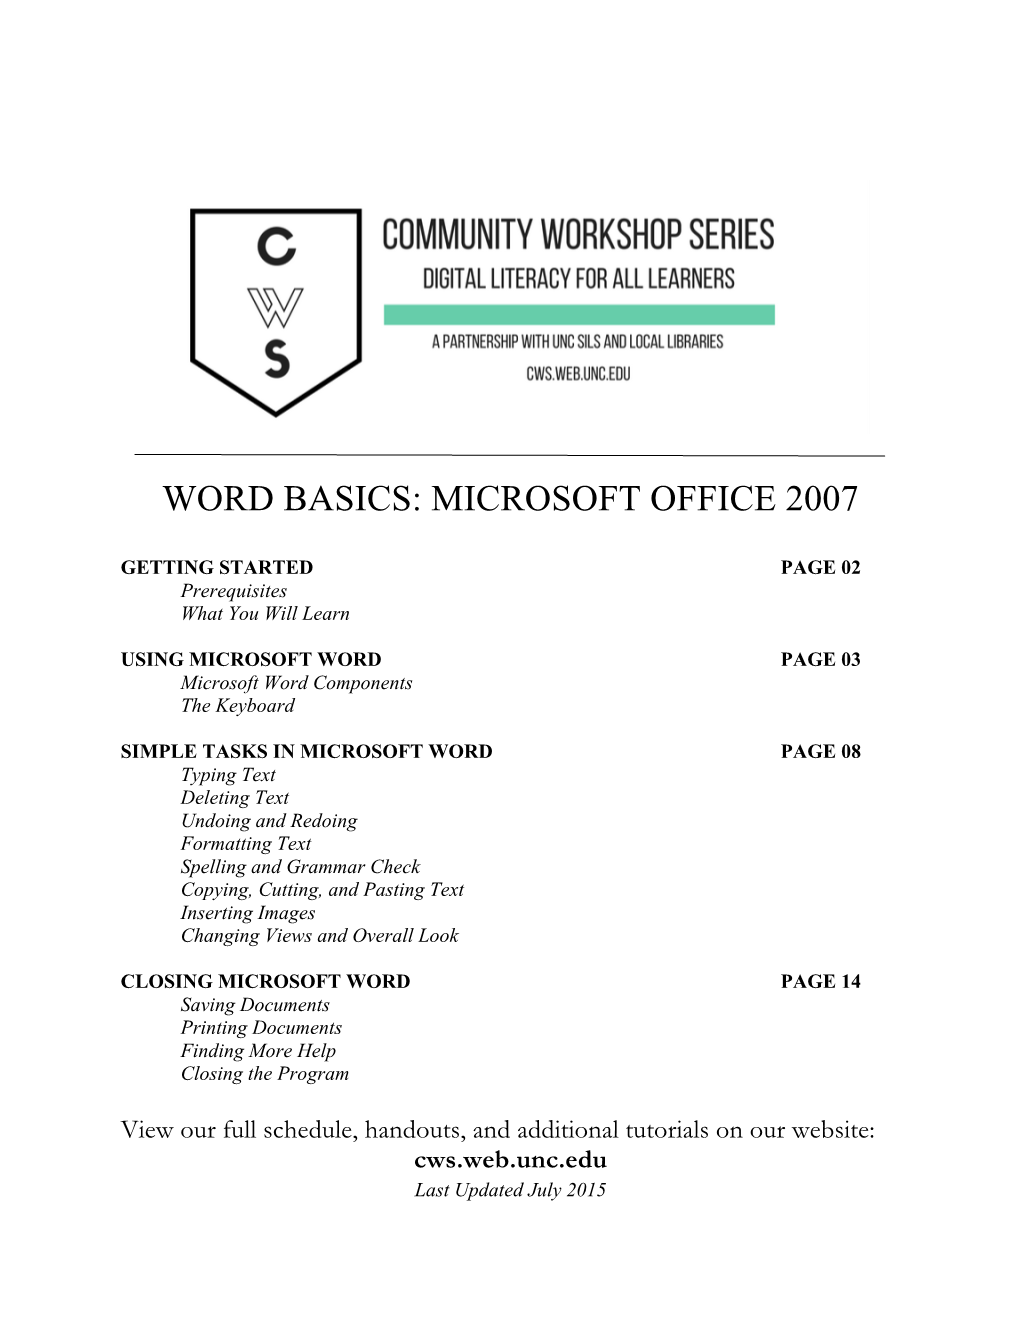 Word Basics: Microsoft Office 2007